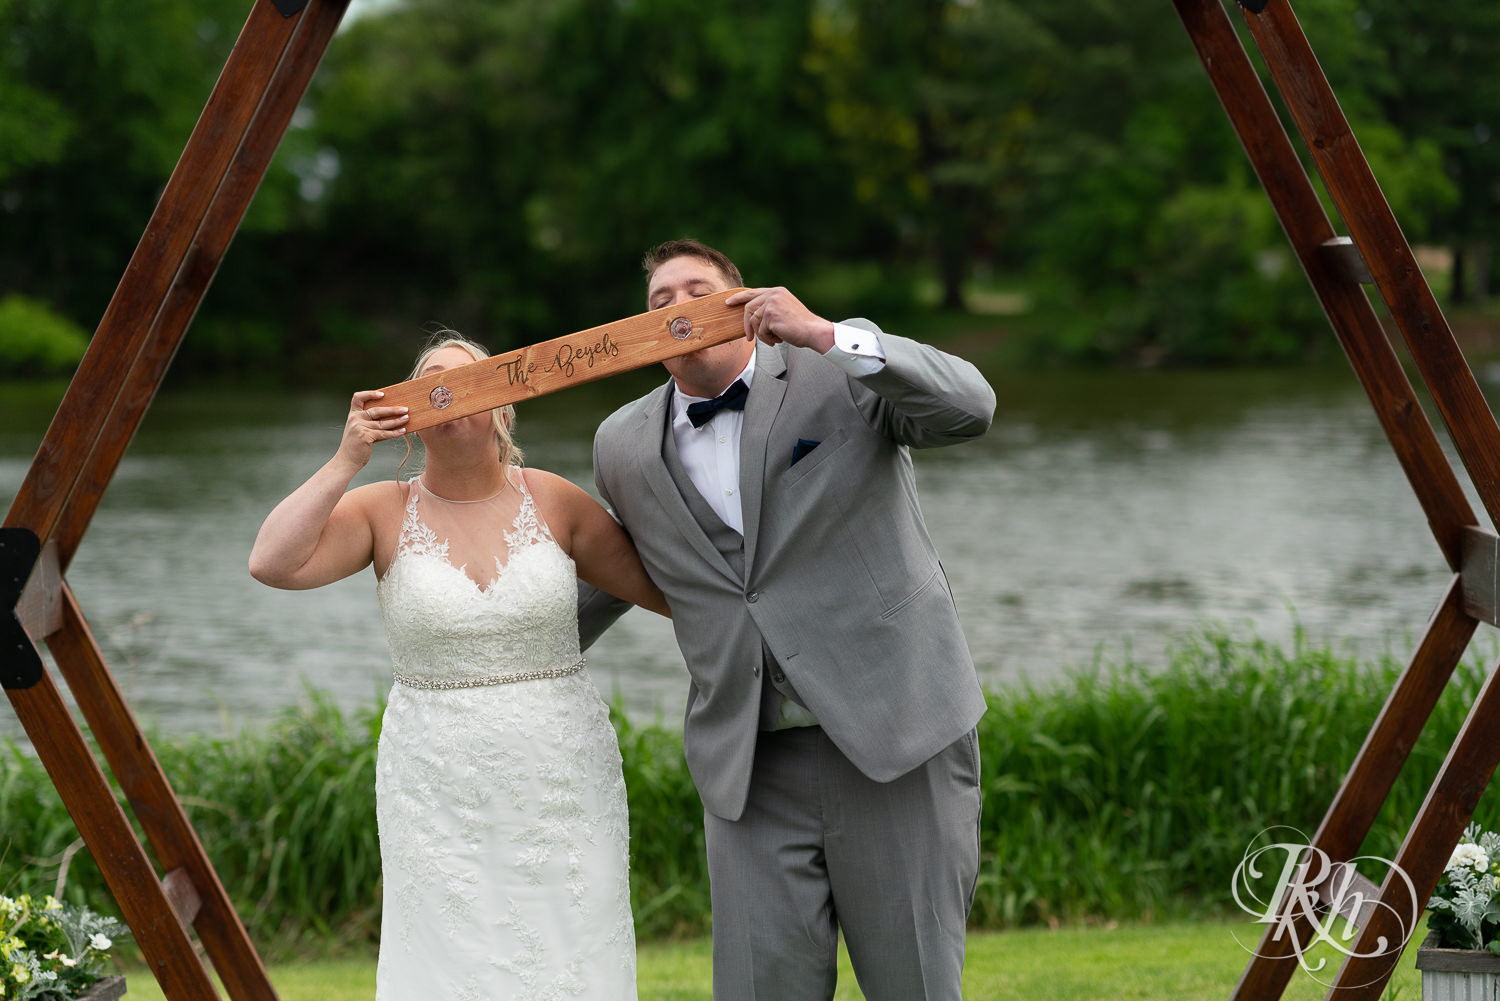 Bride and groom take shot ski lakefront wedding ceremony at Barn at Mirror Lake in Mondovi, Wisconsin.